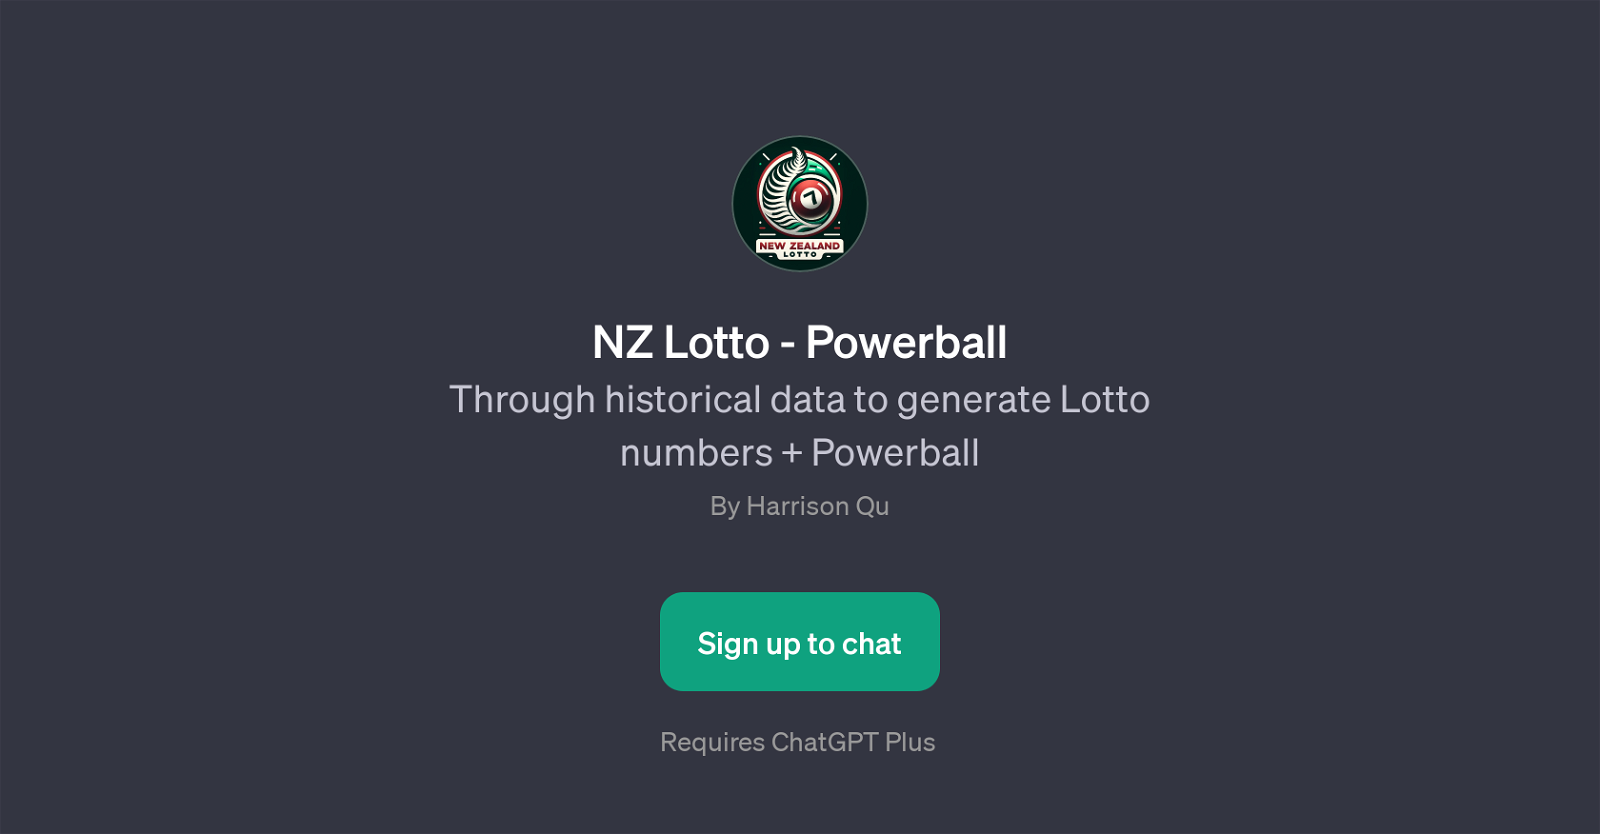 NZ Lotto - Powerball website